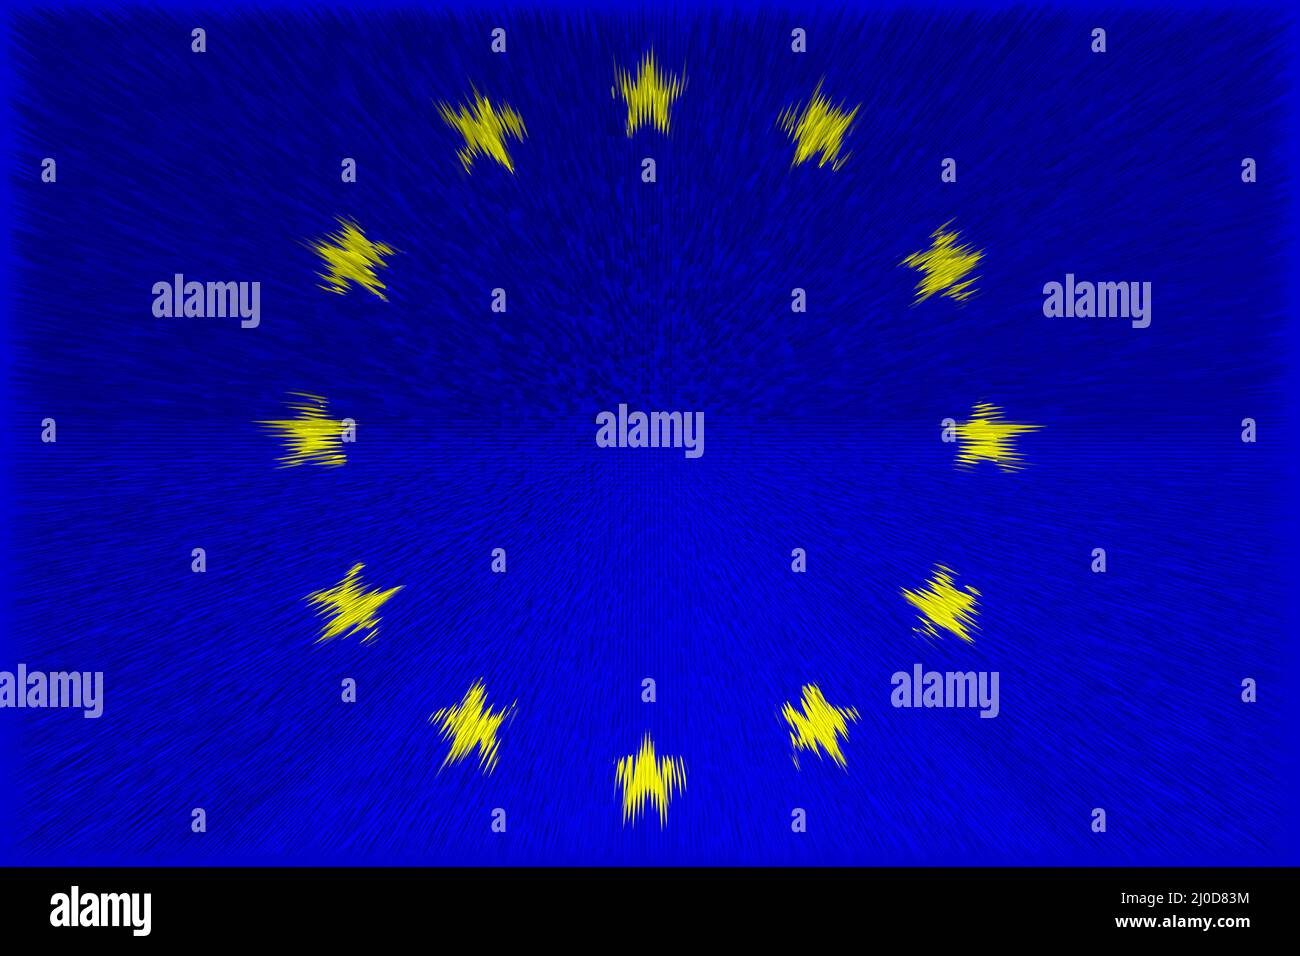 European Union. Flag of European Union. llustration of the flag of European Union. Horizontal design. Abstract design. Illustration. Map. Stock Photo